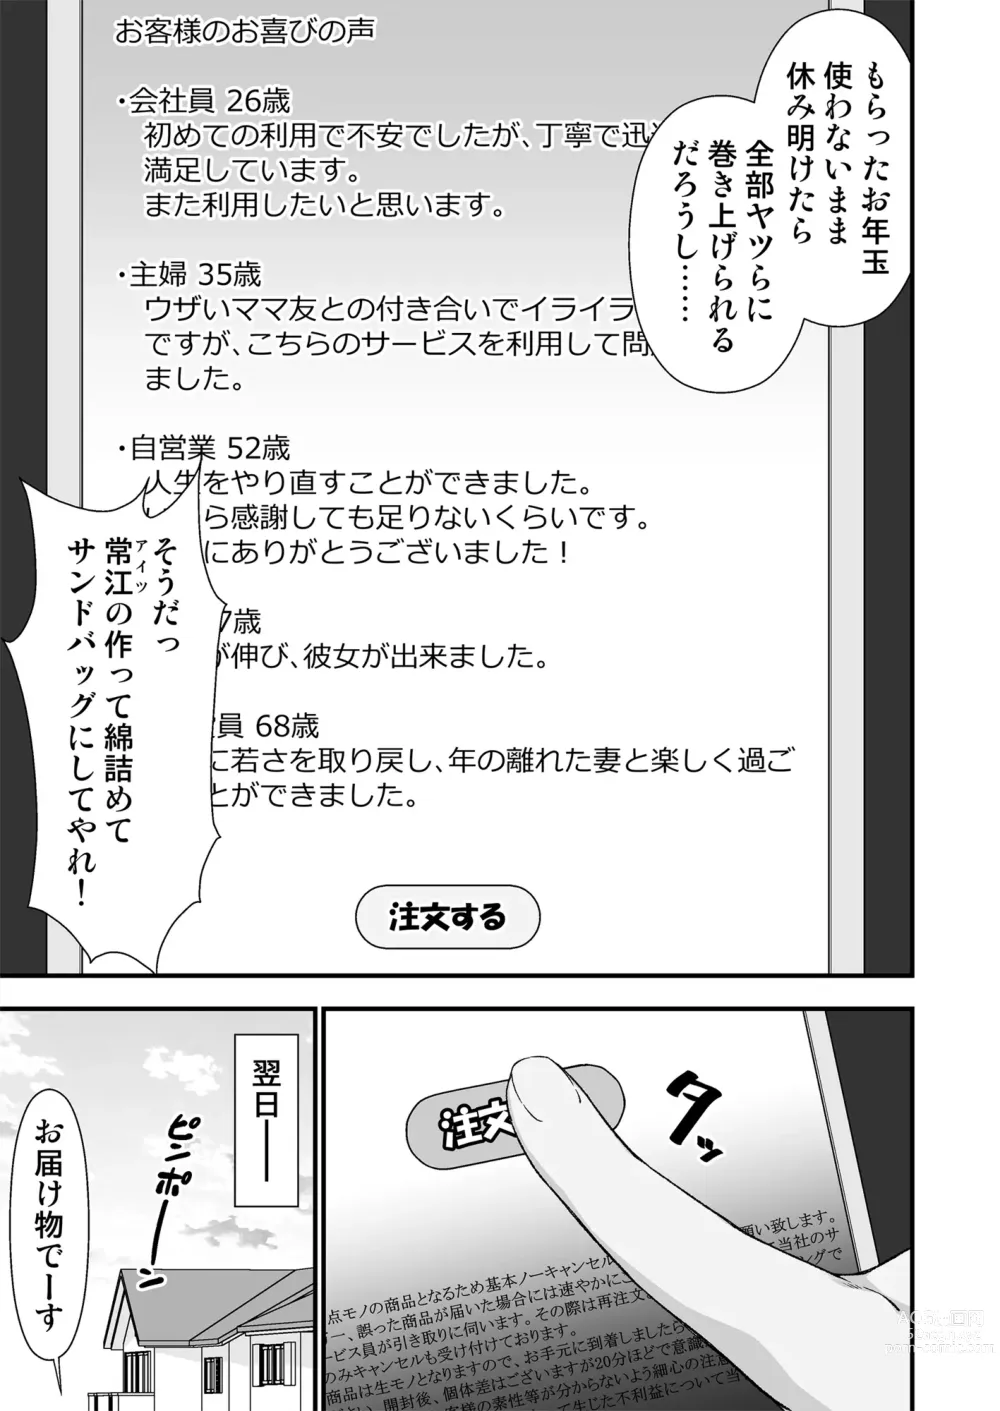 Page 5 of doujinshi Kawa-ka daiko